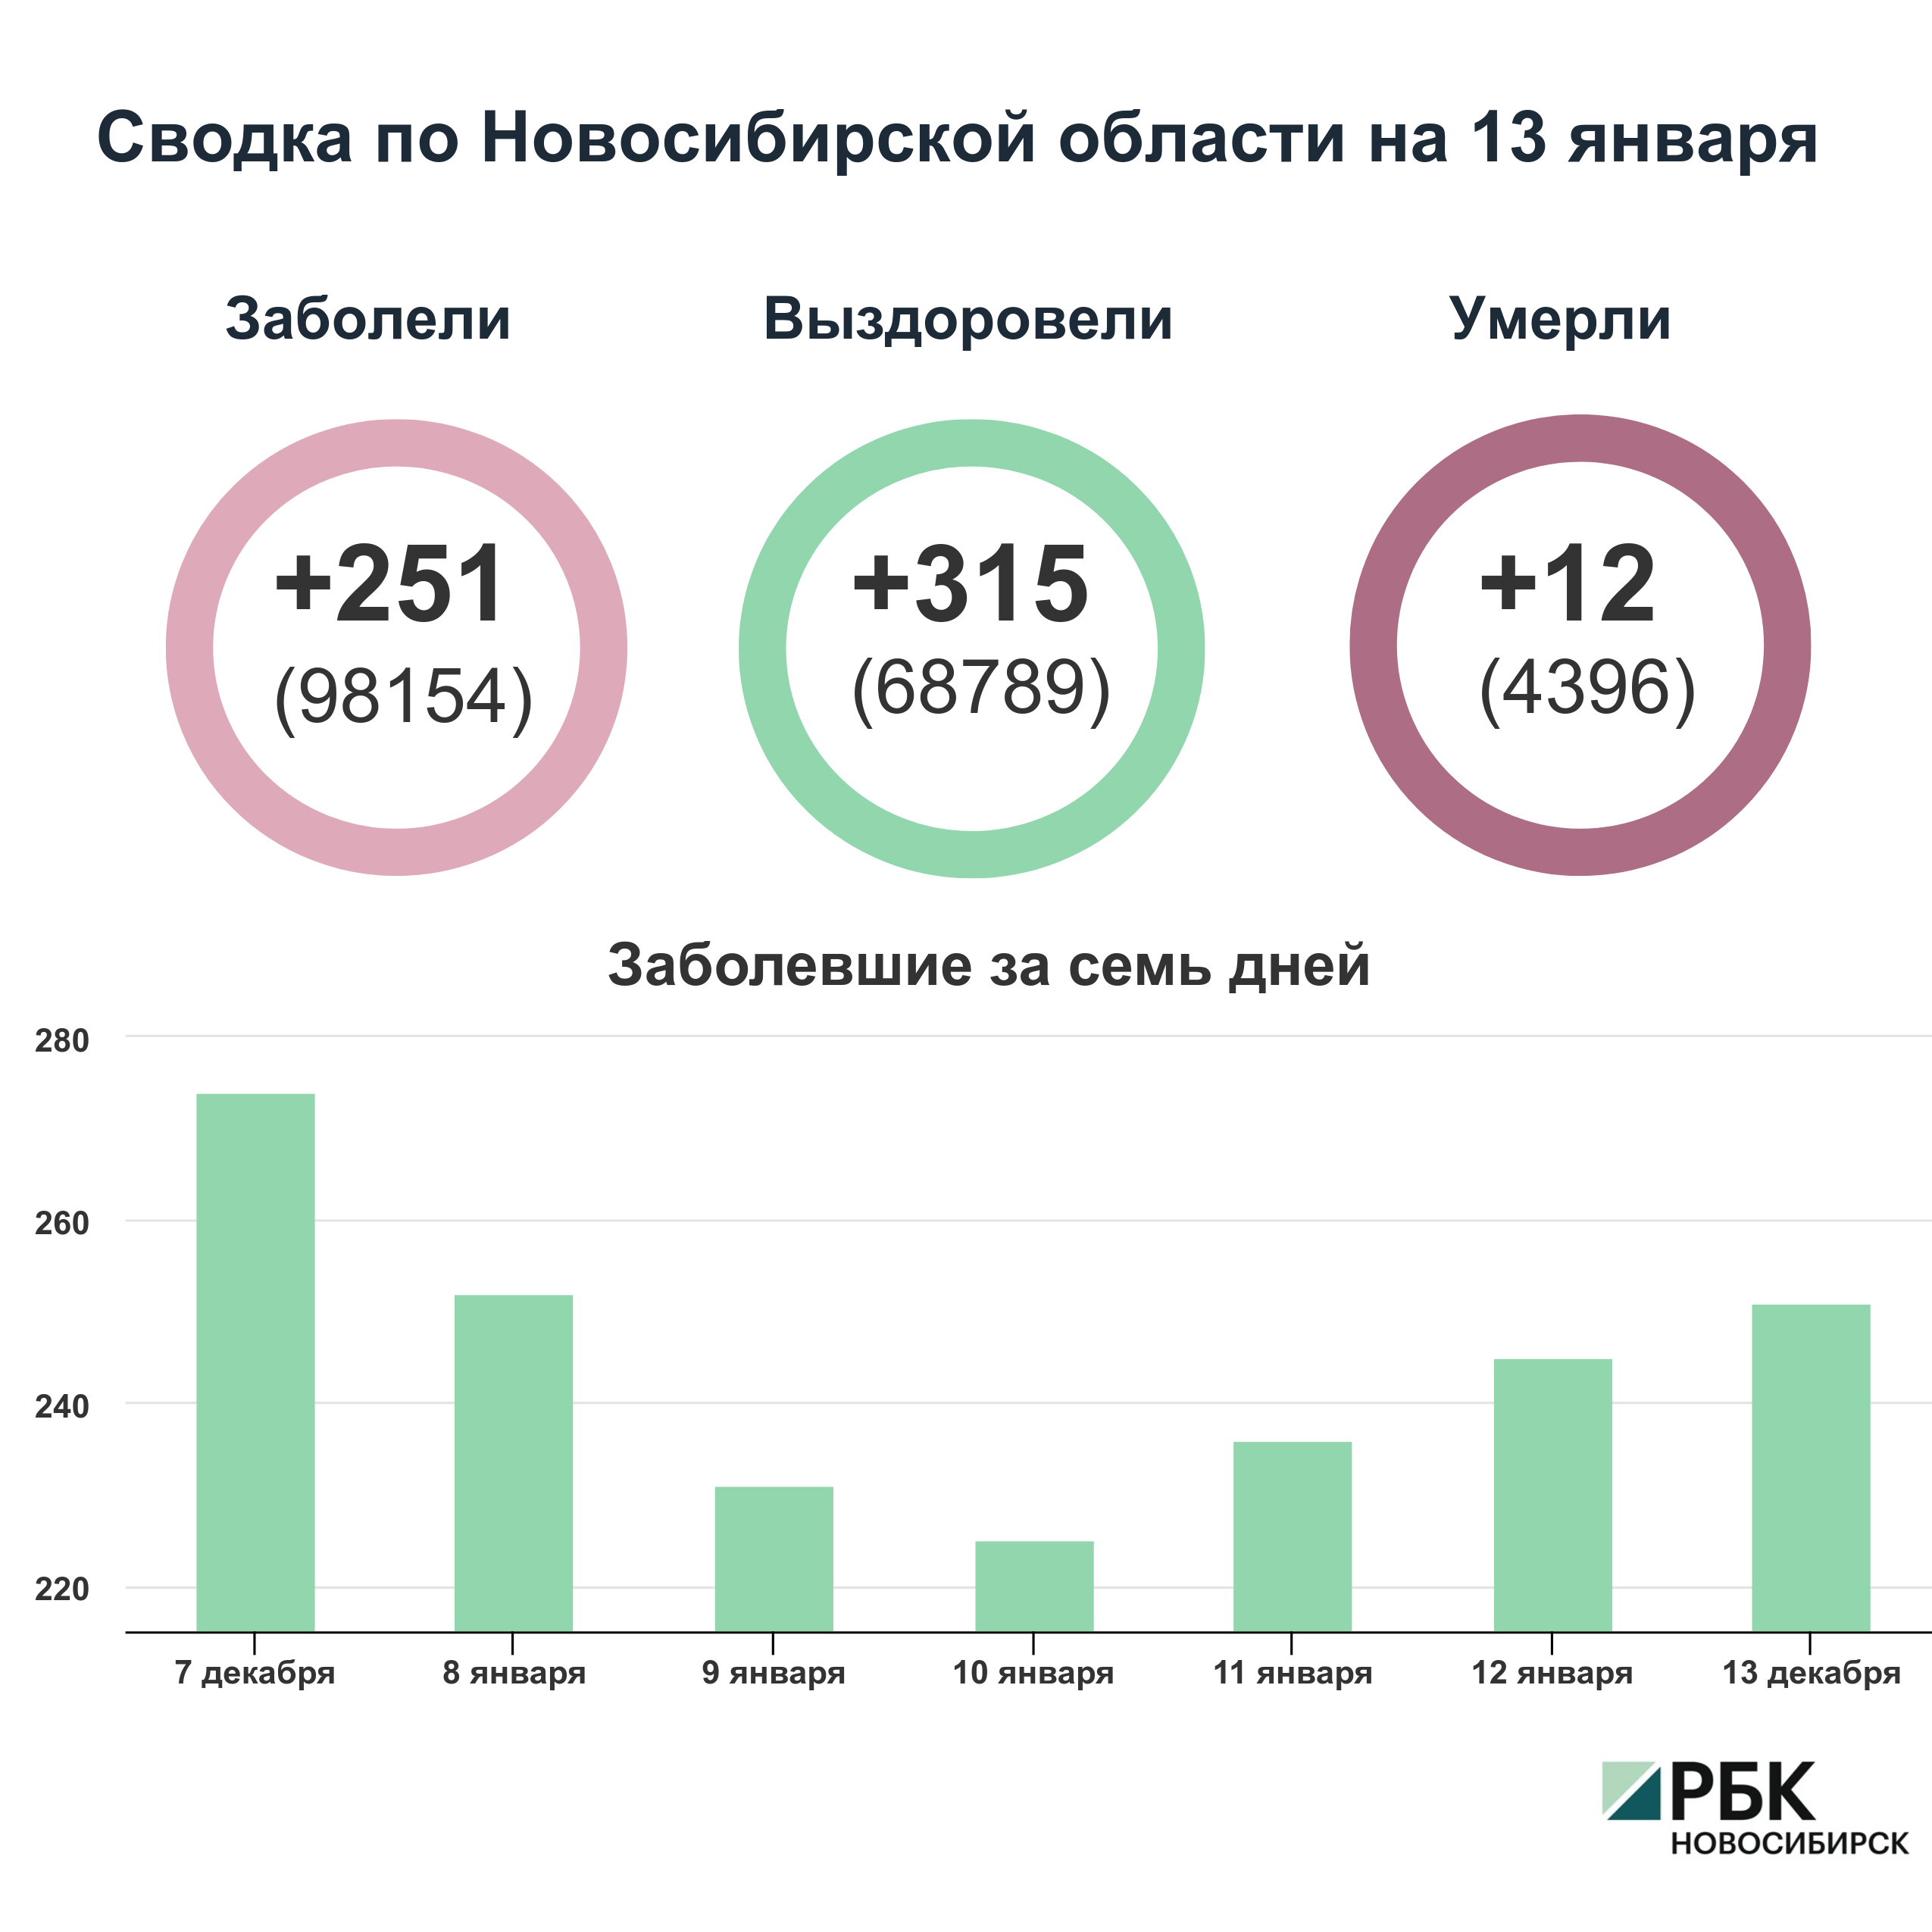 Коронавирус в Новосибирске: сводка на 13 января